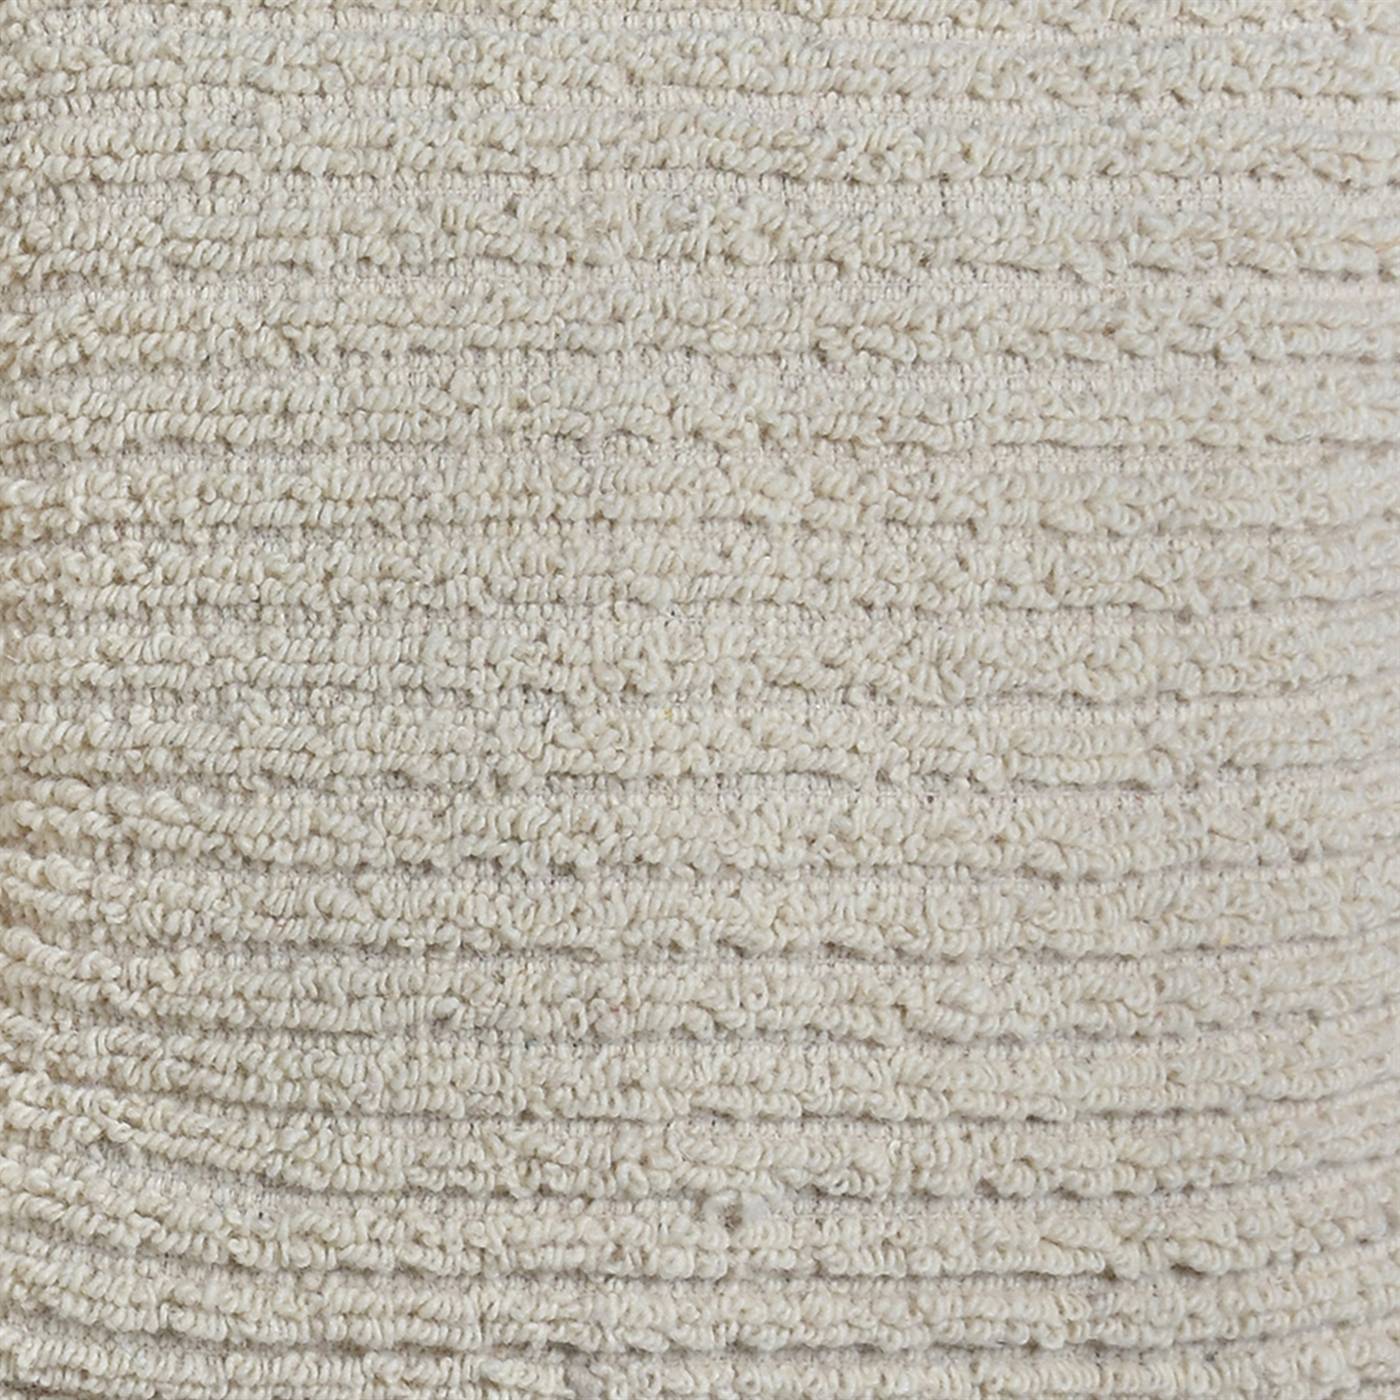 Altoga Cushion, 45x45 cm, Natural White, Wool, Hand Woven, Handwoven, All Loop